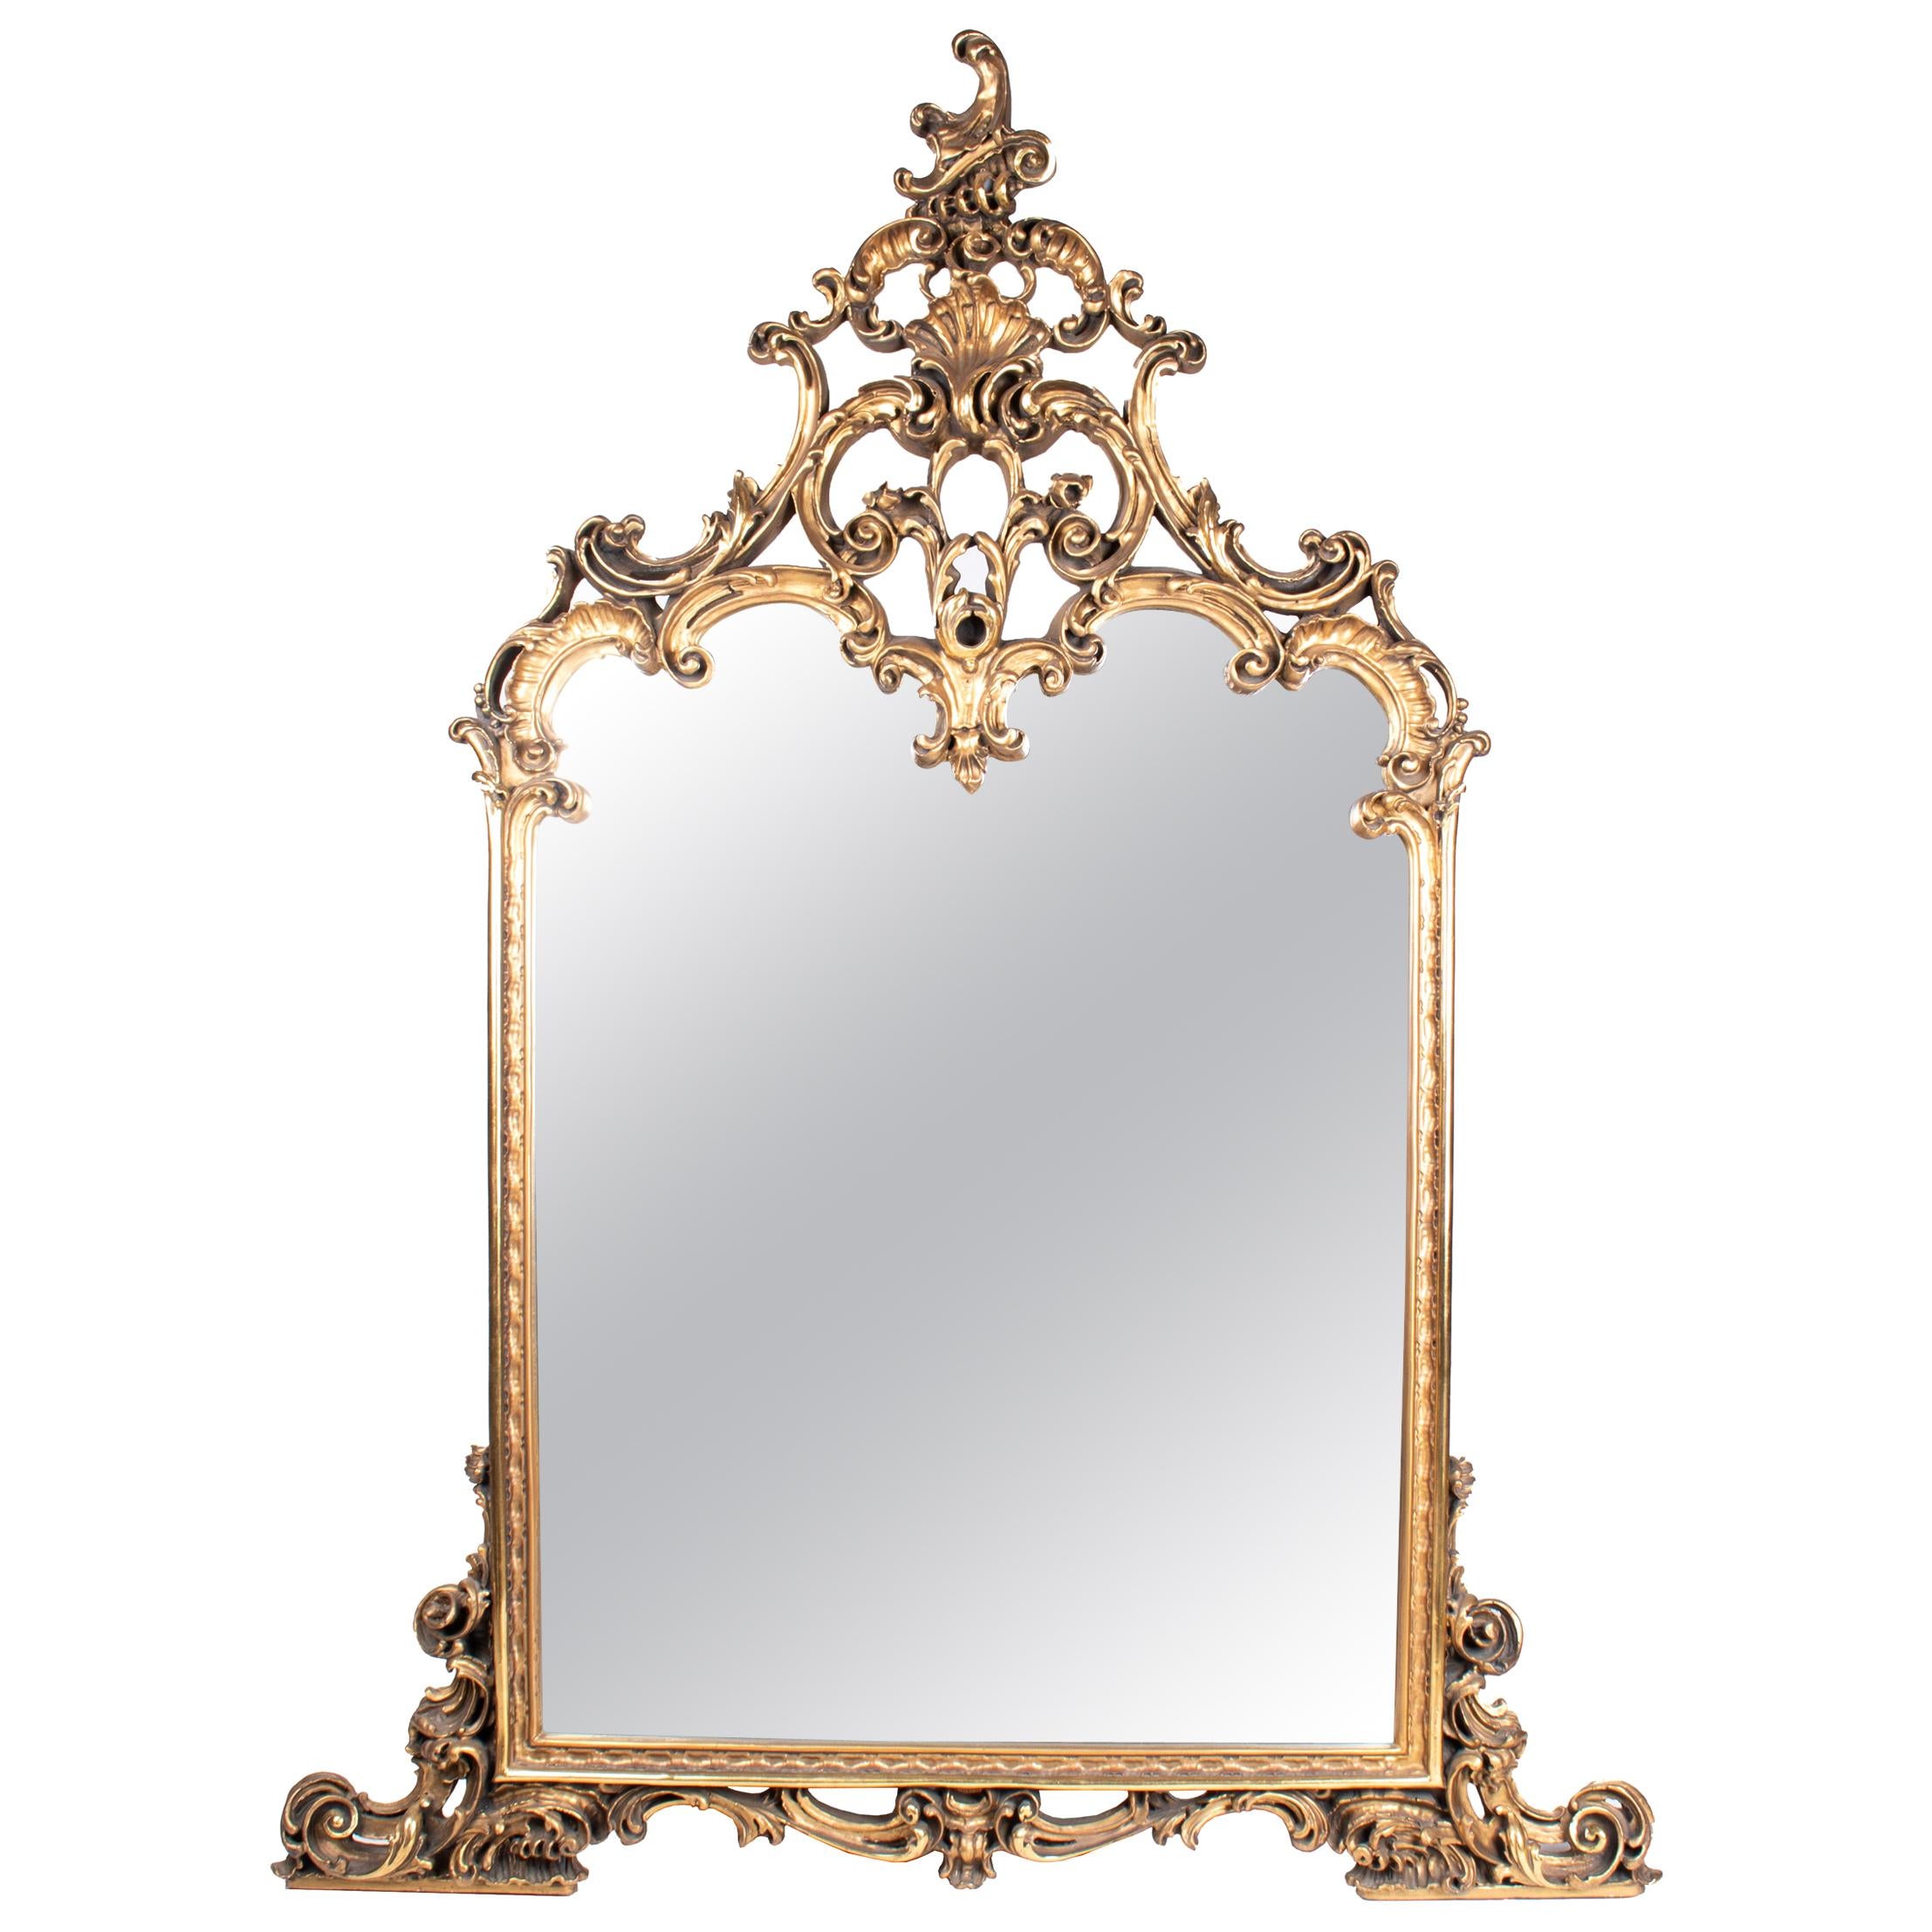 show original title Details about   Wall Mirror Black Silver 96x57 Antique Mirror Baroque Shabby Chic Floor Mirror 1 